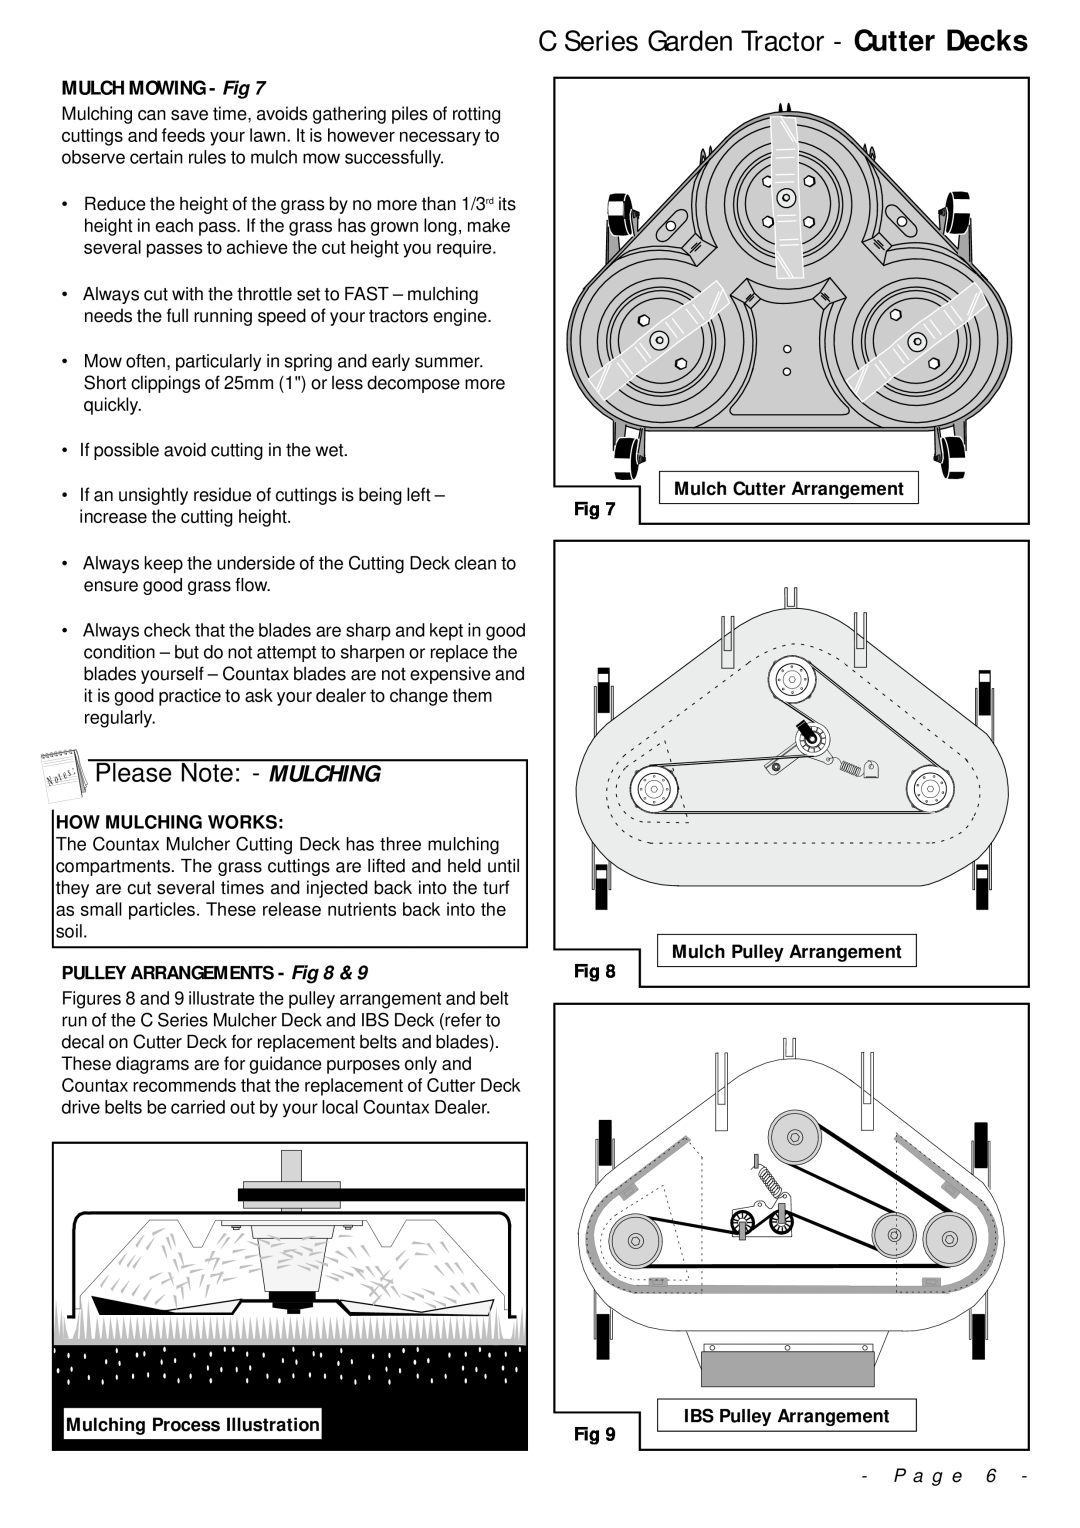 Countax manual C Series Garden Tractor - Cutter Decks, Please Note - MULCHING, MULCH MOWING - Fig, Pulley Arrangements 